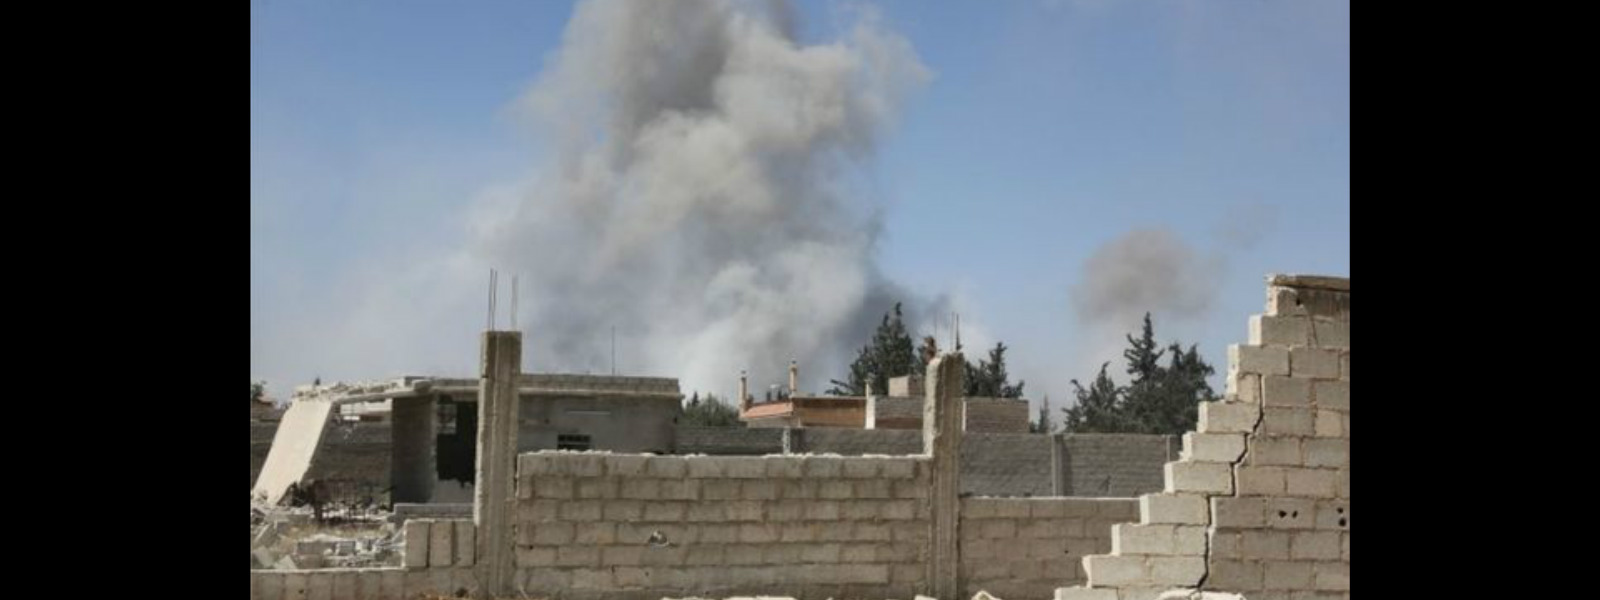 Suspected gas attack kills seventy in Syria